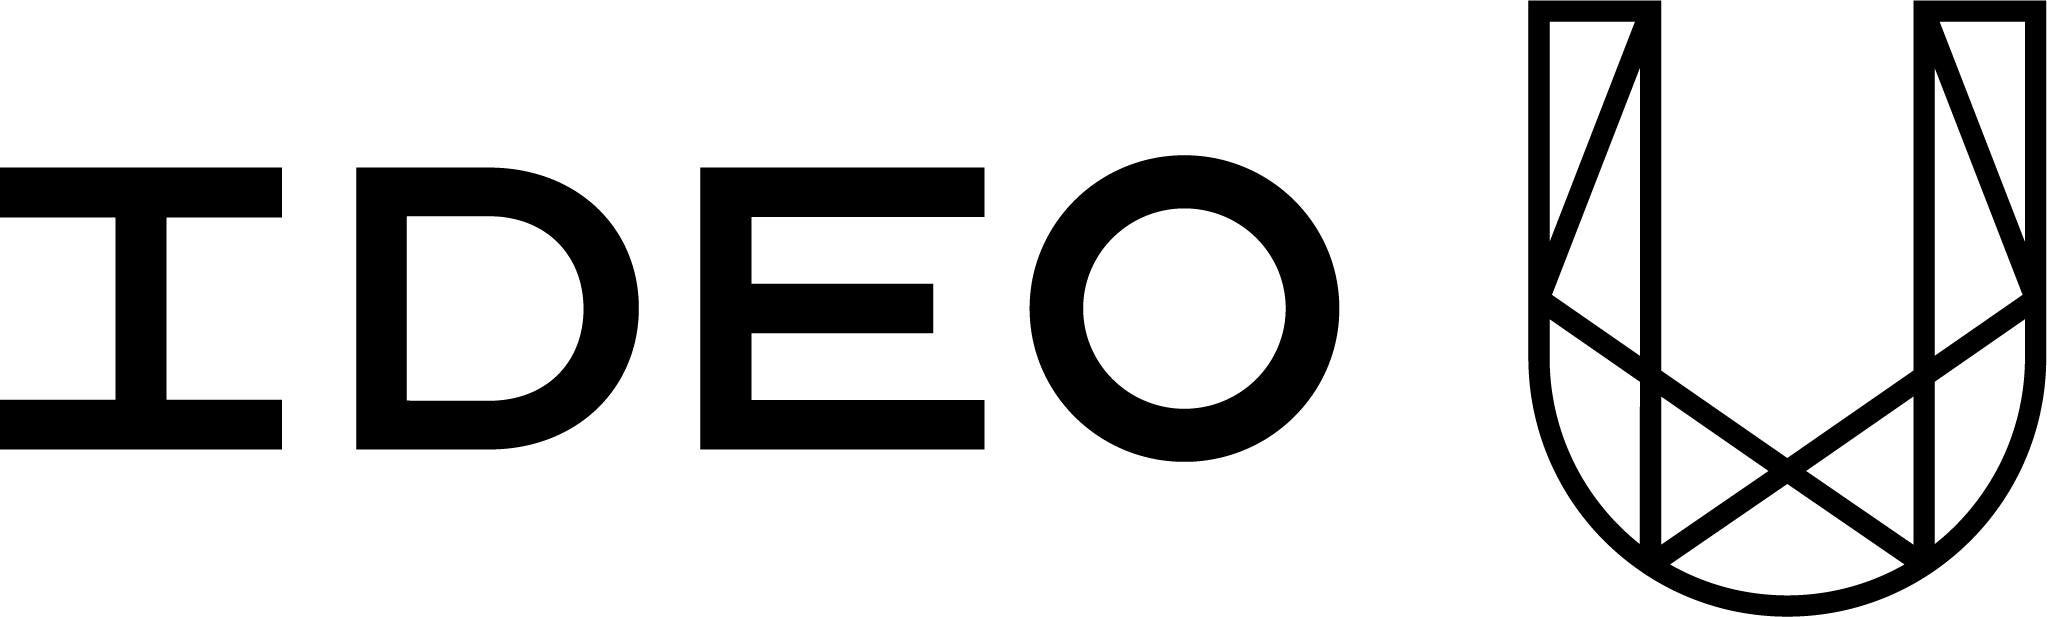 Ideo Logo - Design Thinking Online Courses - IDEO U